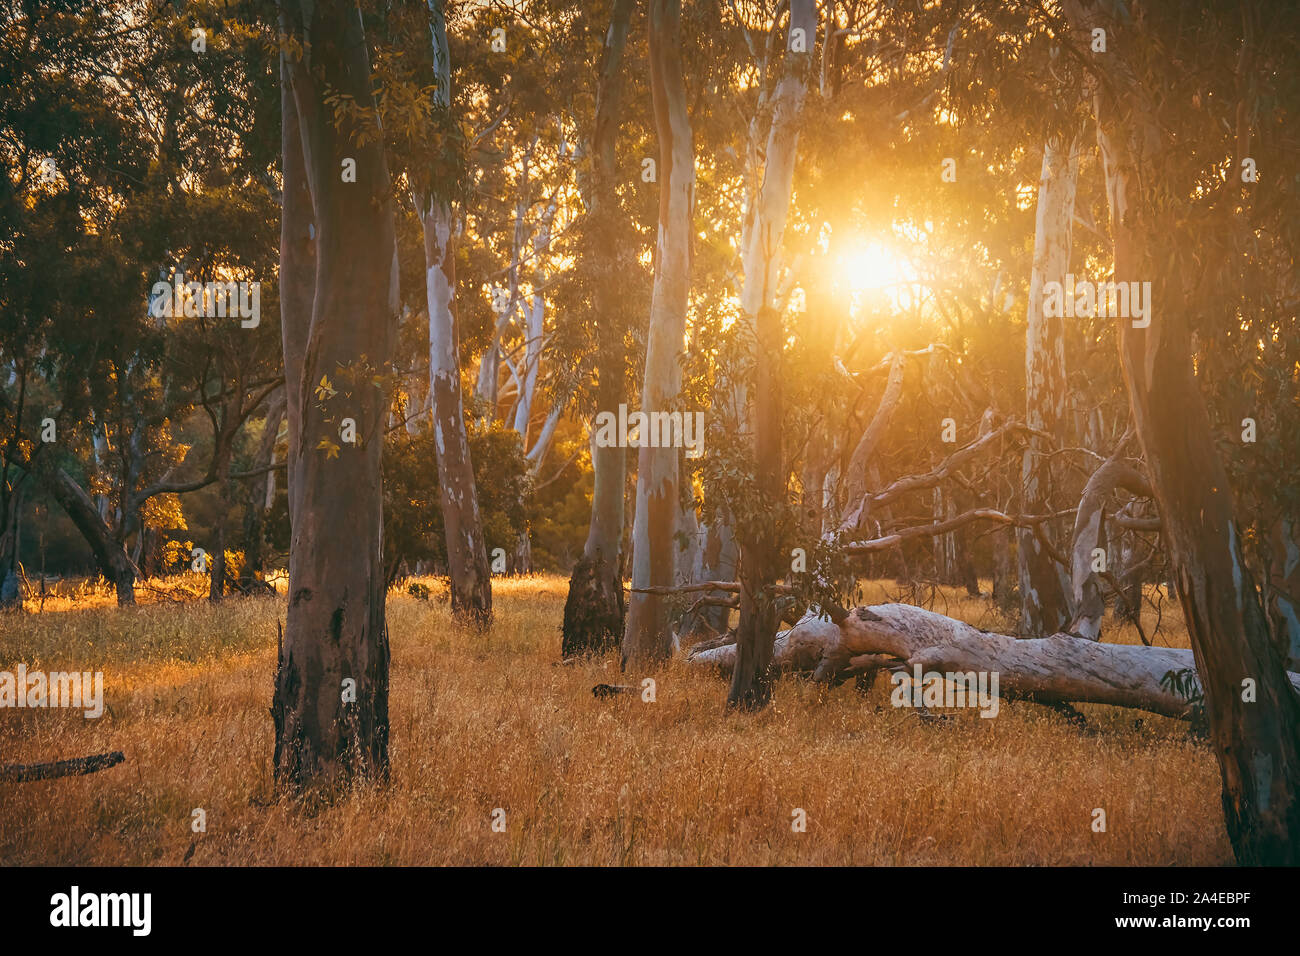 Sunset viewed through Eucalyptus trees, South Australia Stock Photo